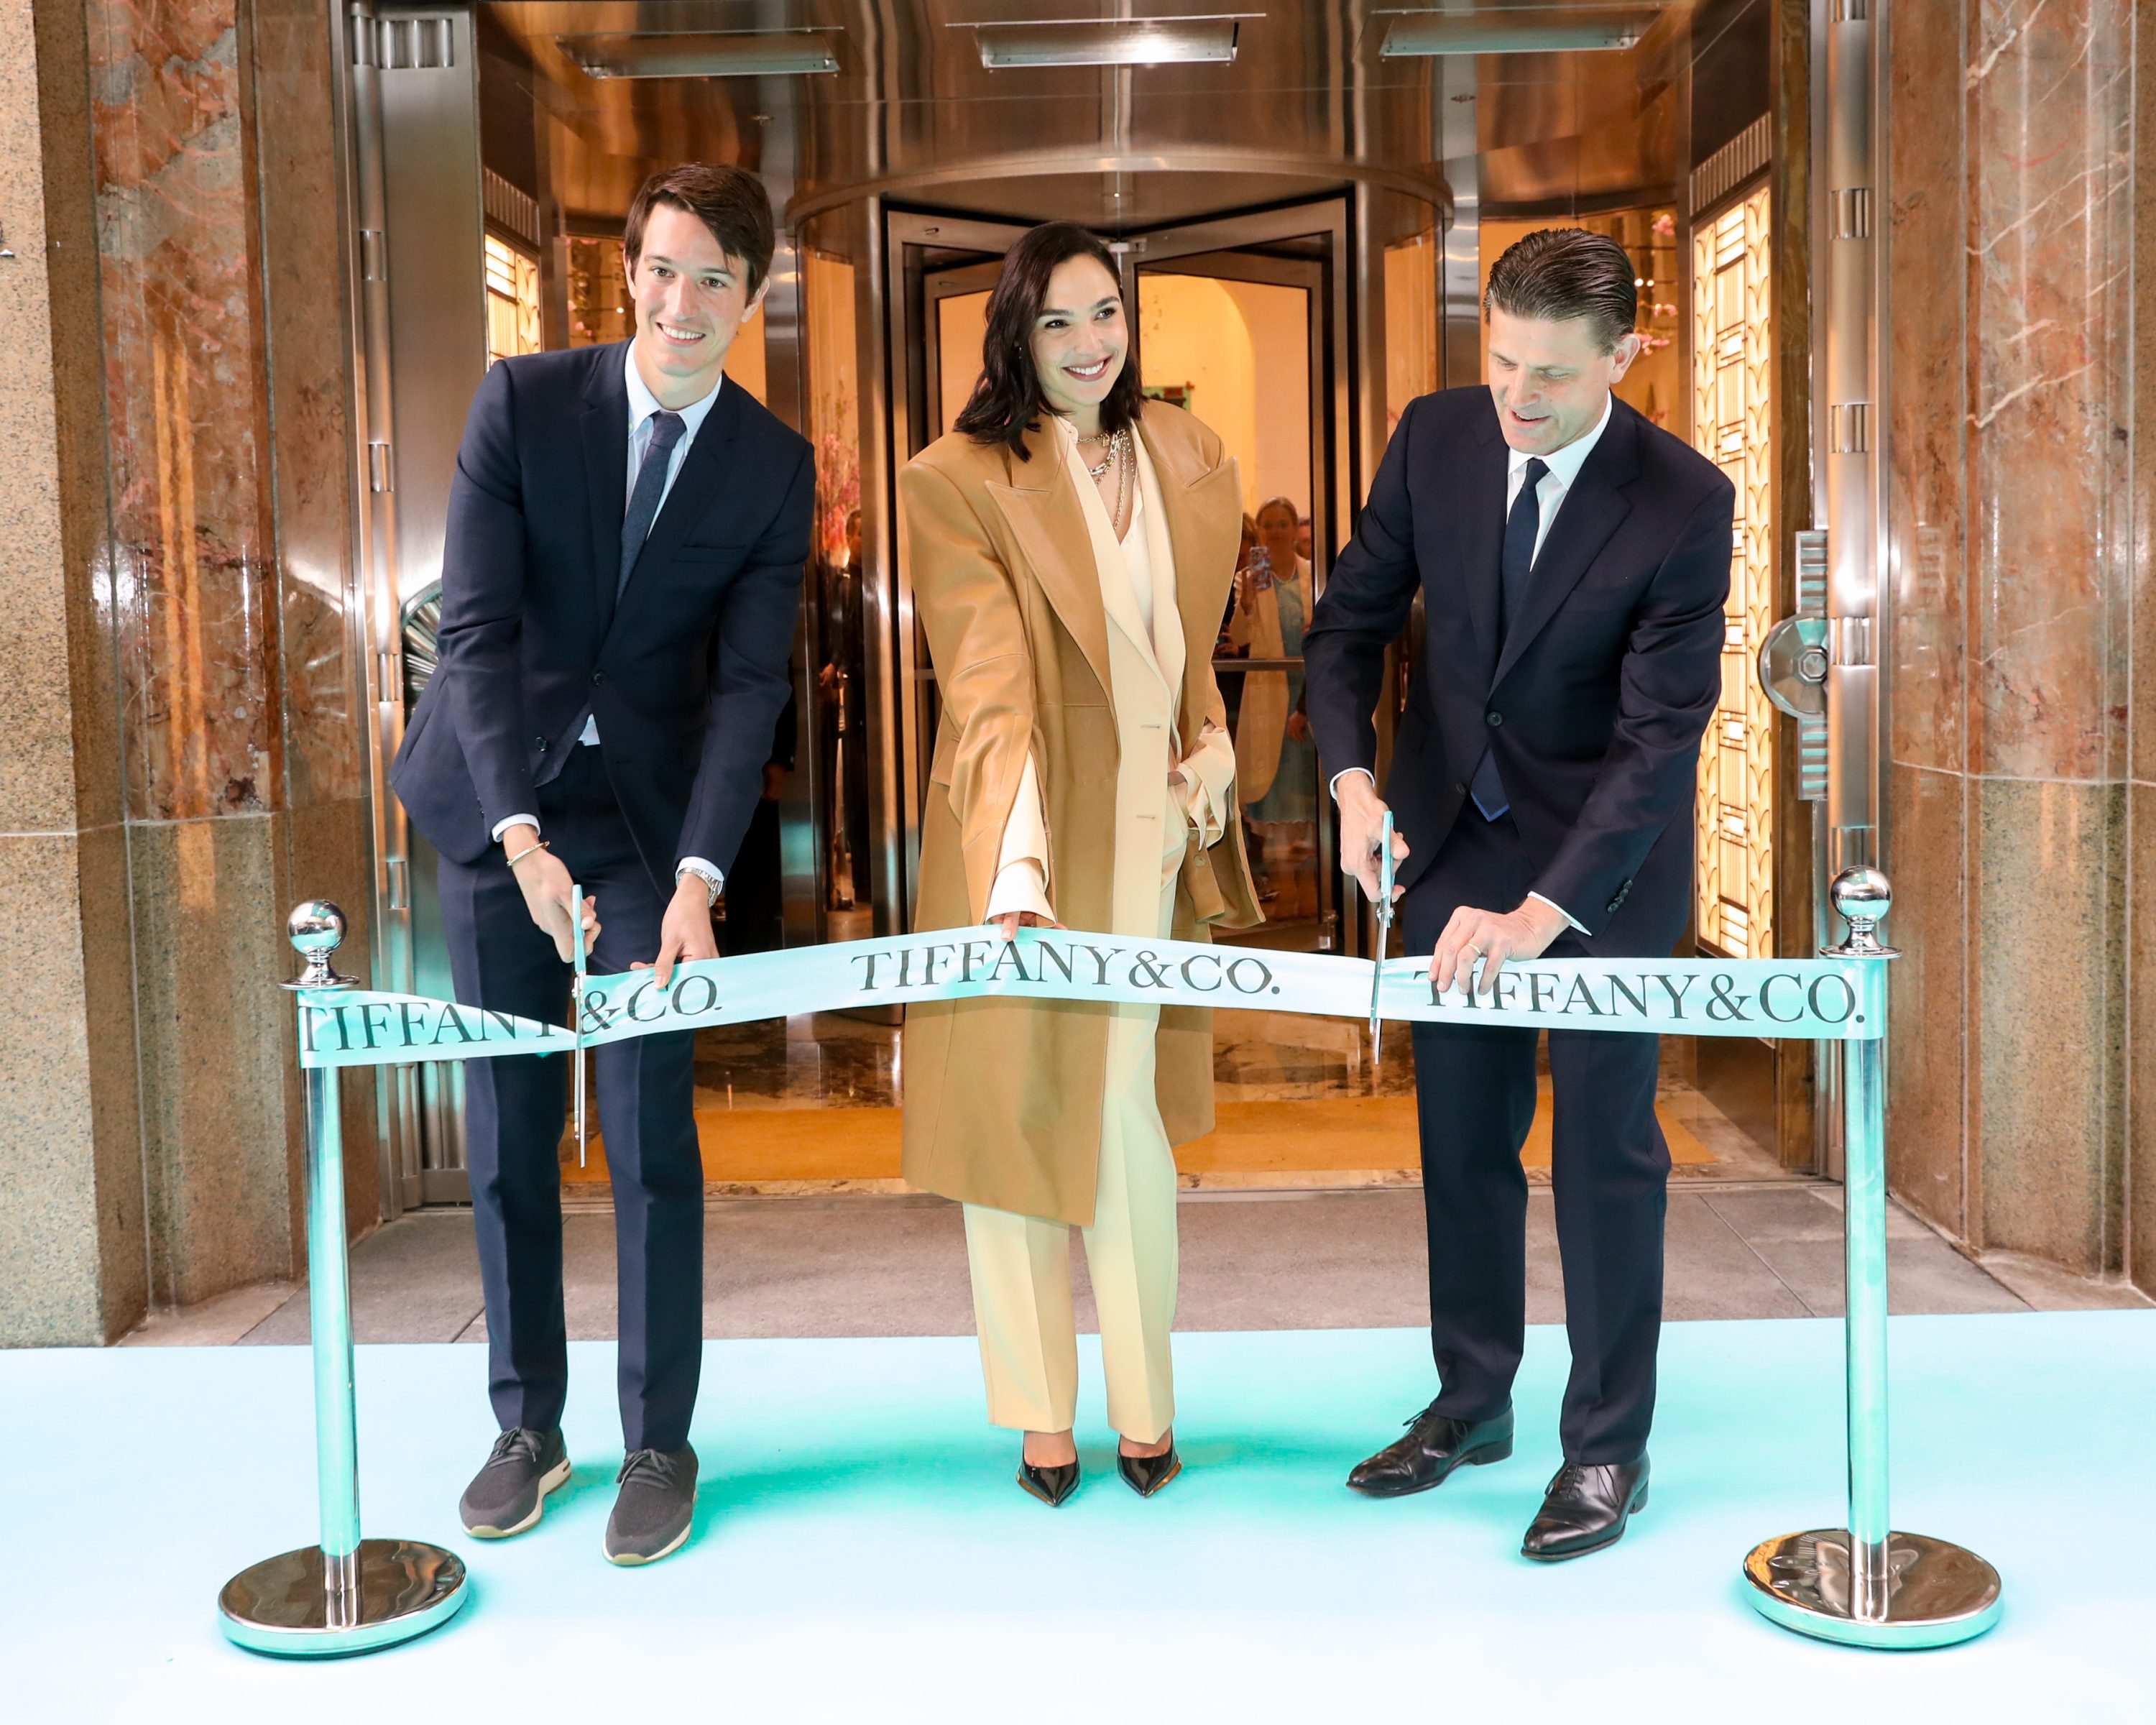 How has Alexandre Arnault transformed Tiffany & Co?